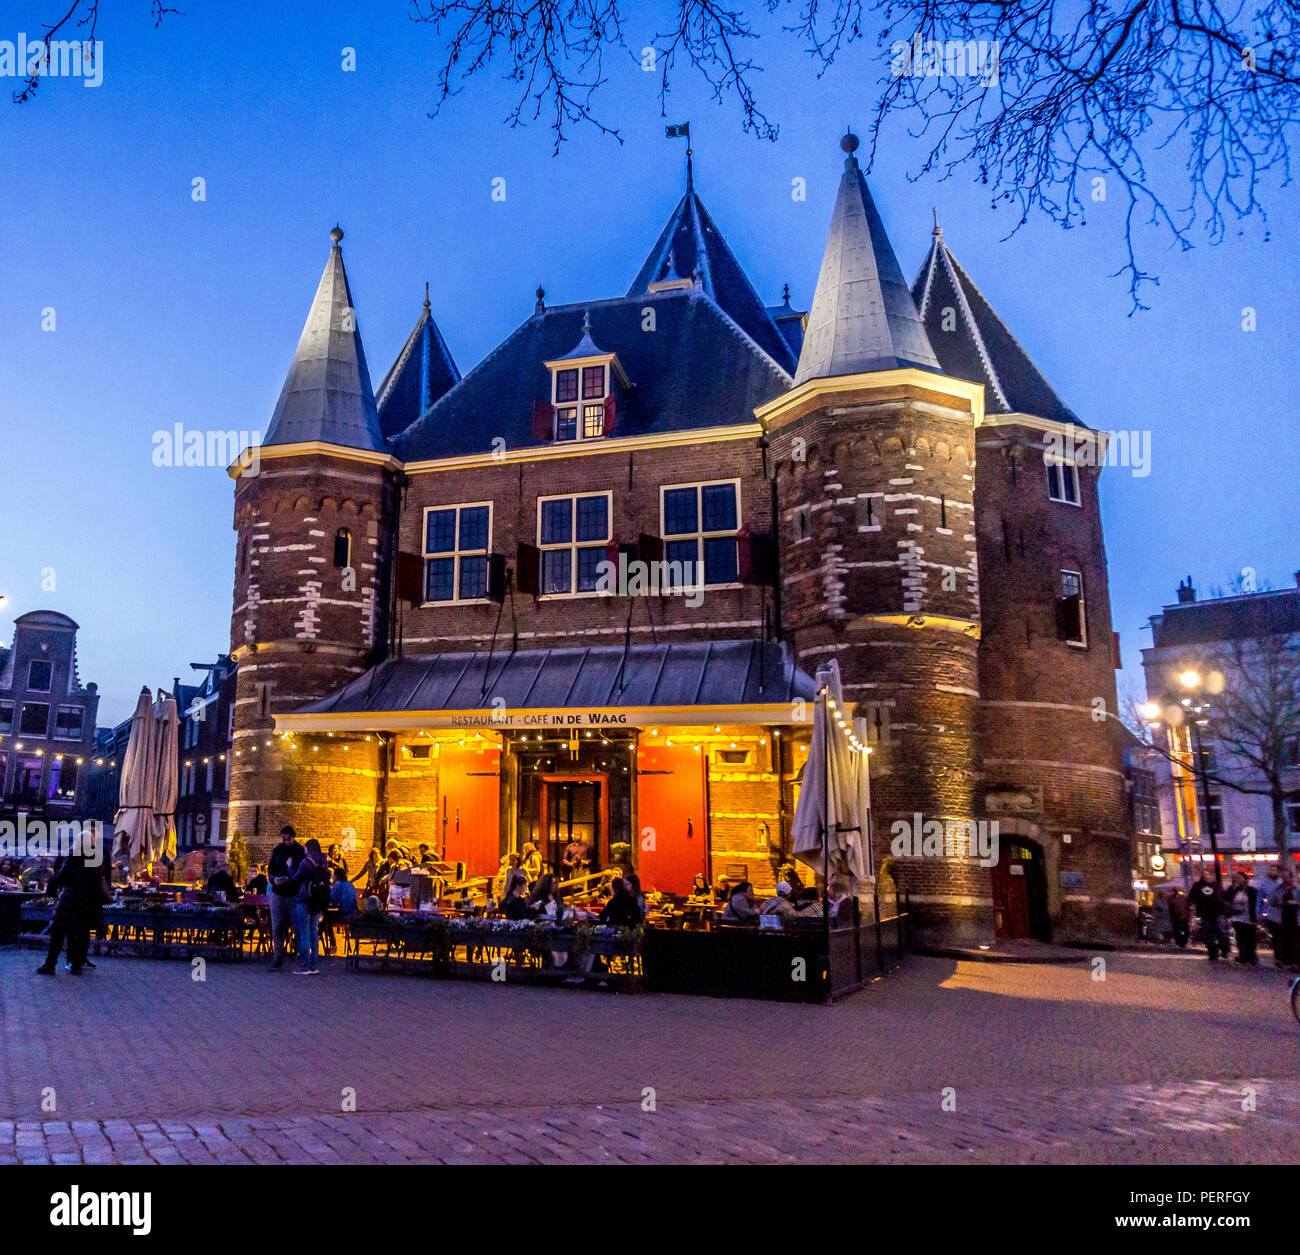 Cafe In de Waag, at night, Nieuwmarkt 4, 1012 CR Amsterdam, Netherlands Stock Photo